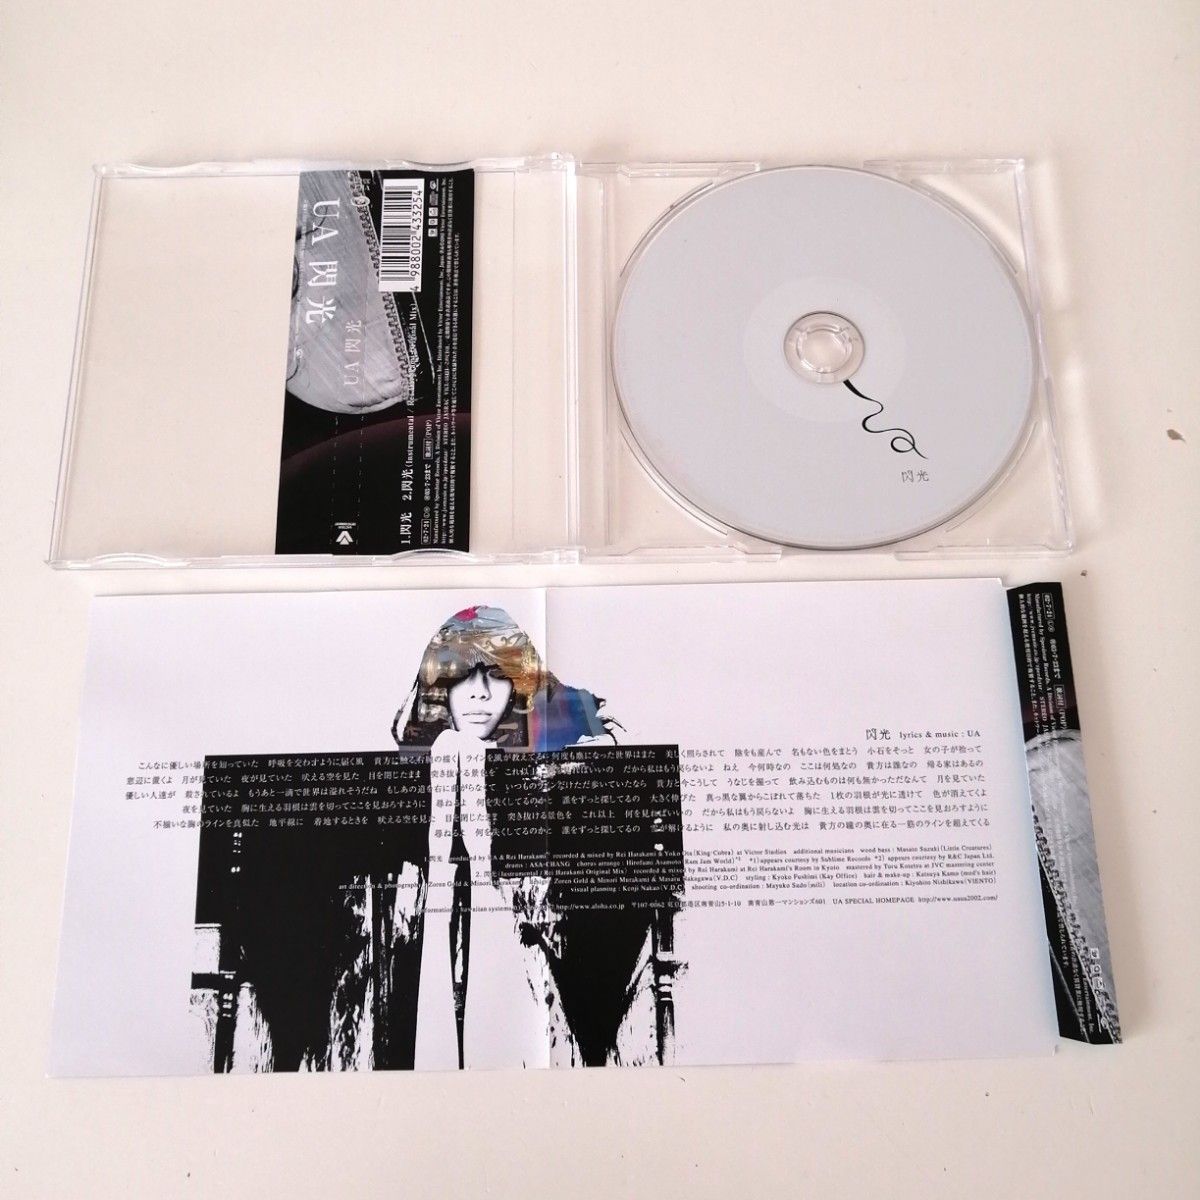 【CD】UA　3枚セット　HORIZON / スカートの砂 / 閃光UA　CD 3枚セット